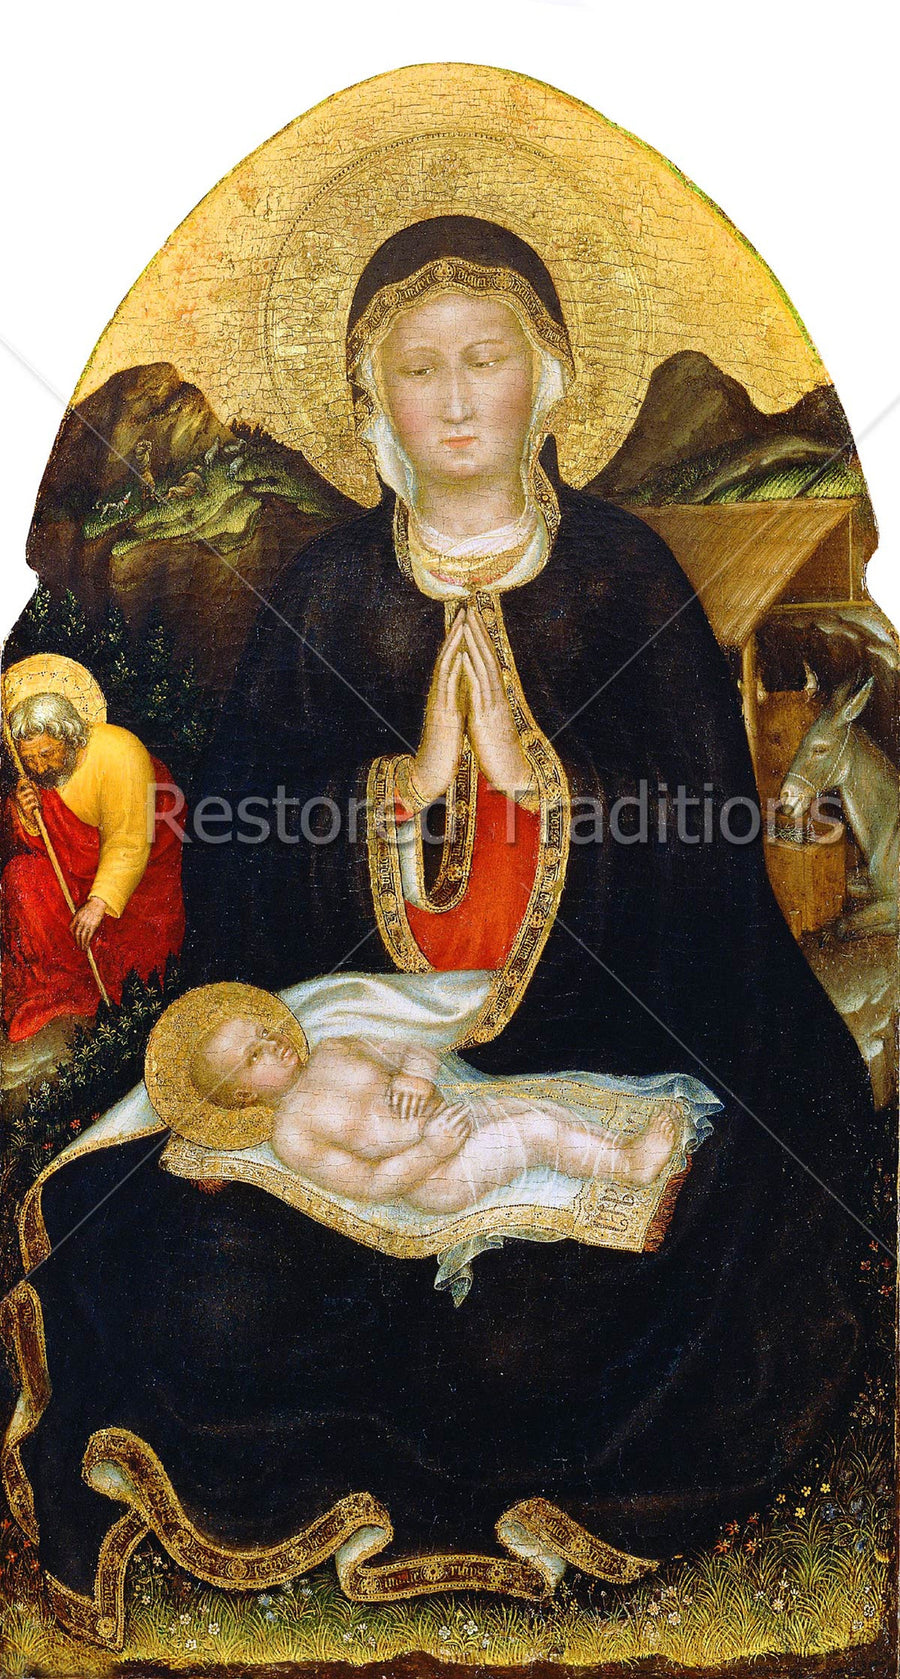 Infant Jesus on Mary's Lap